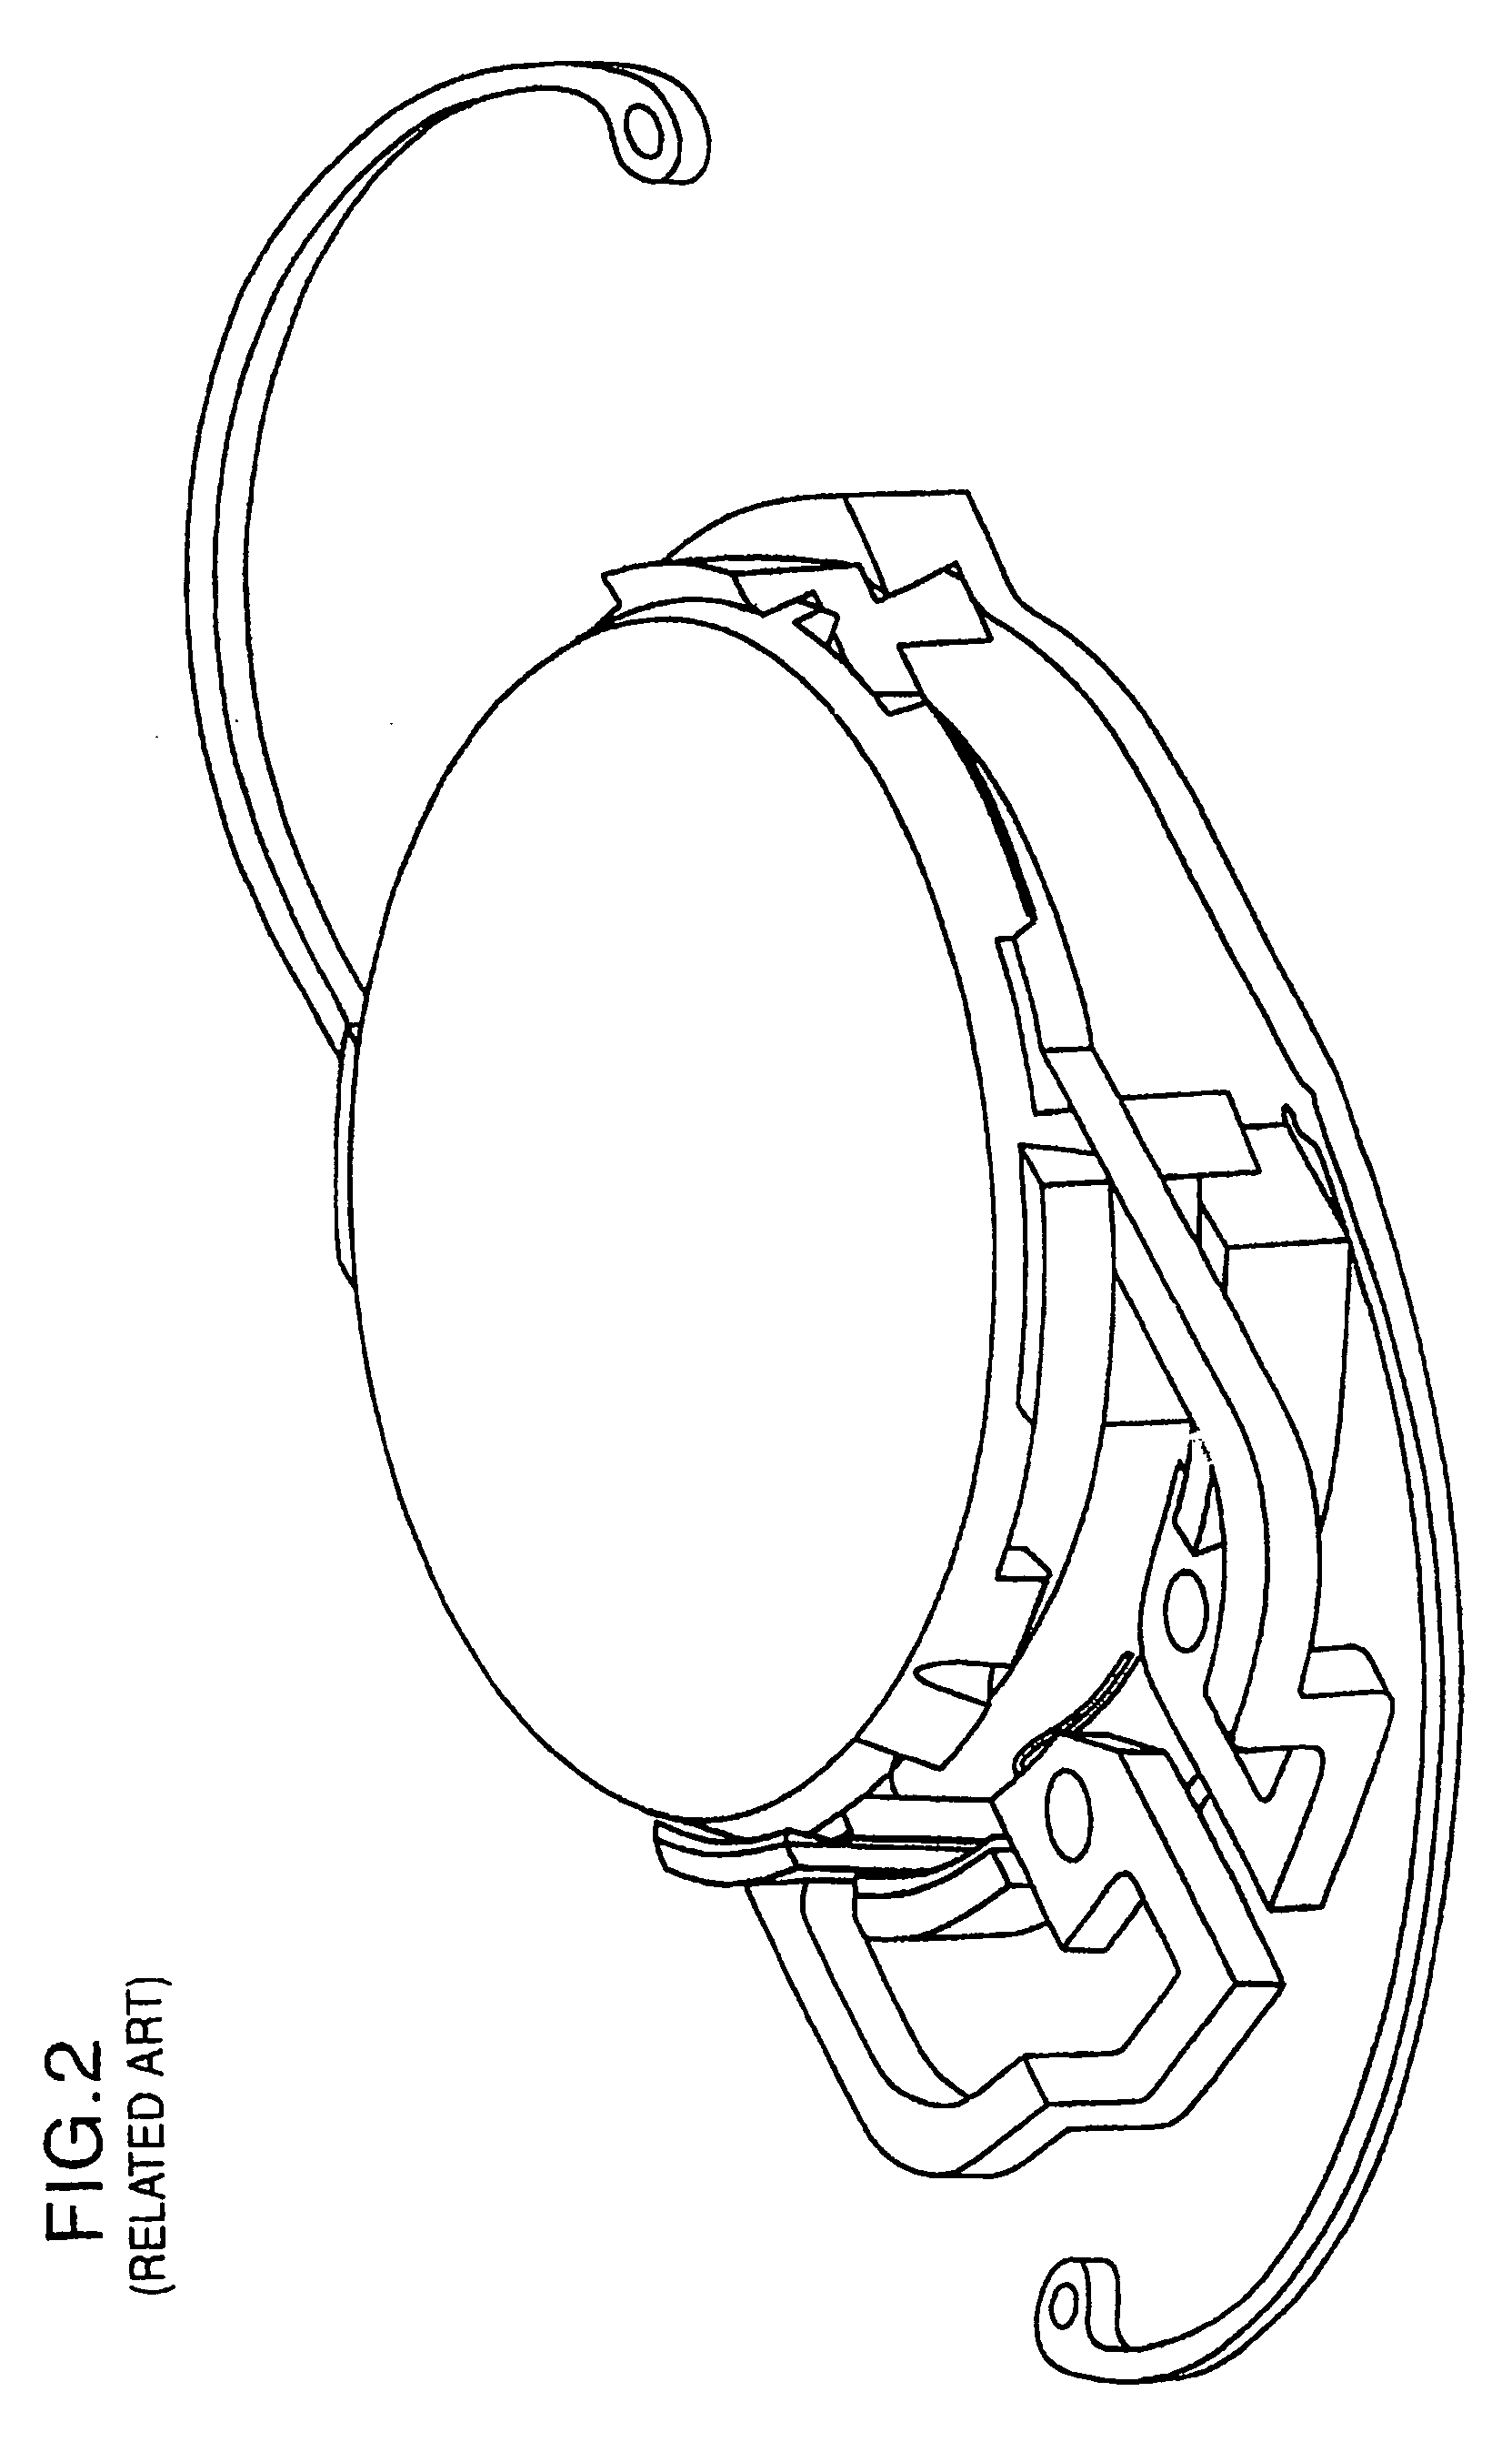 Intraocular lens system